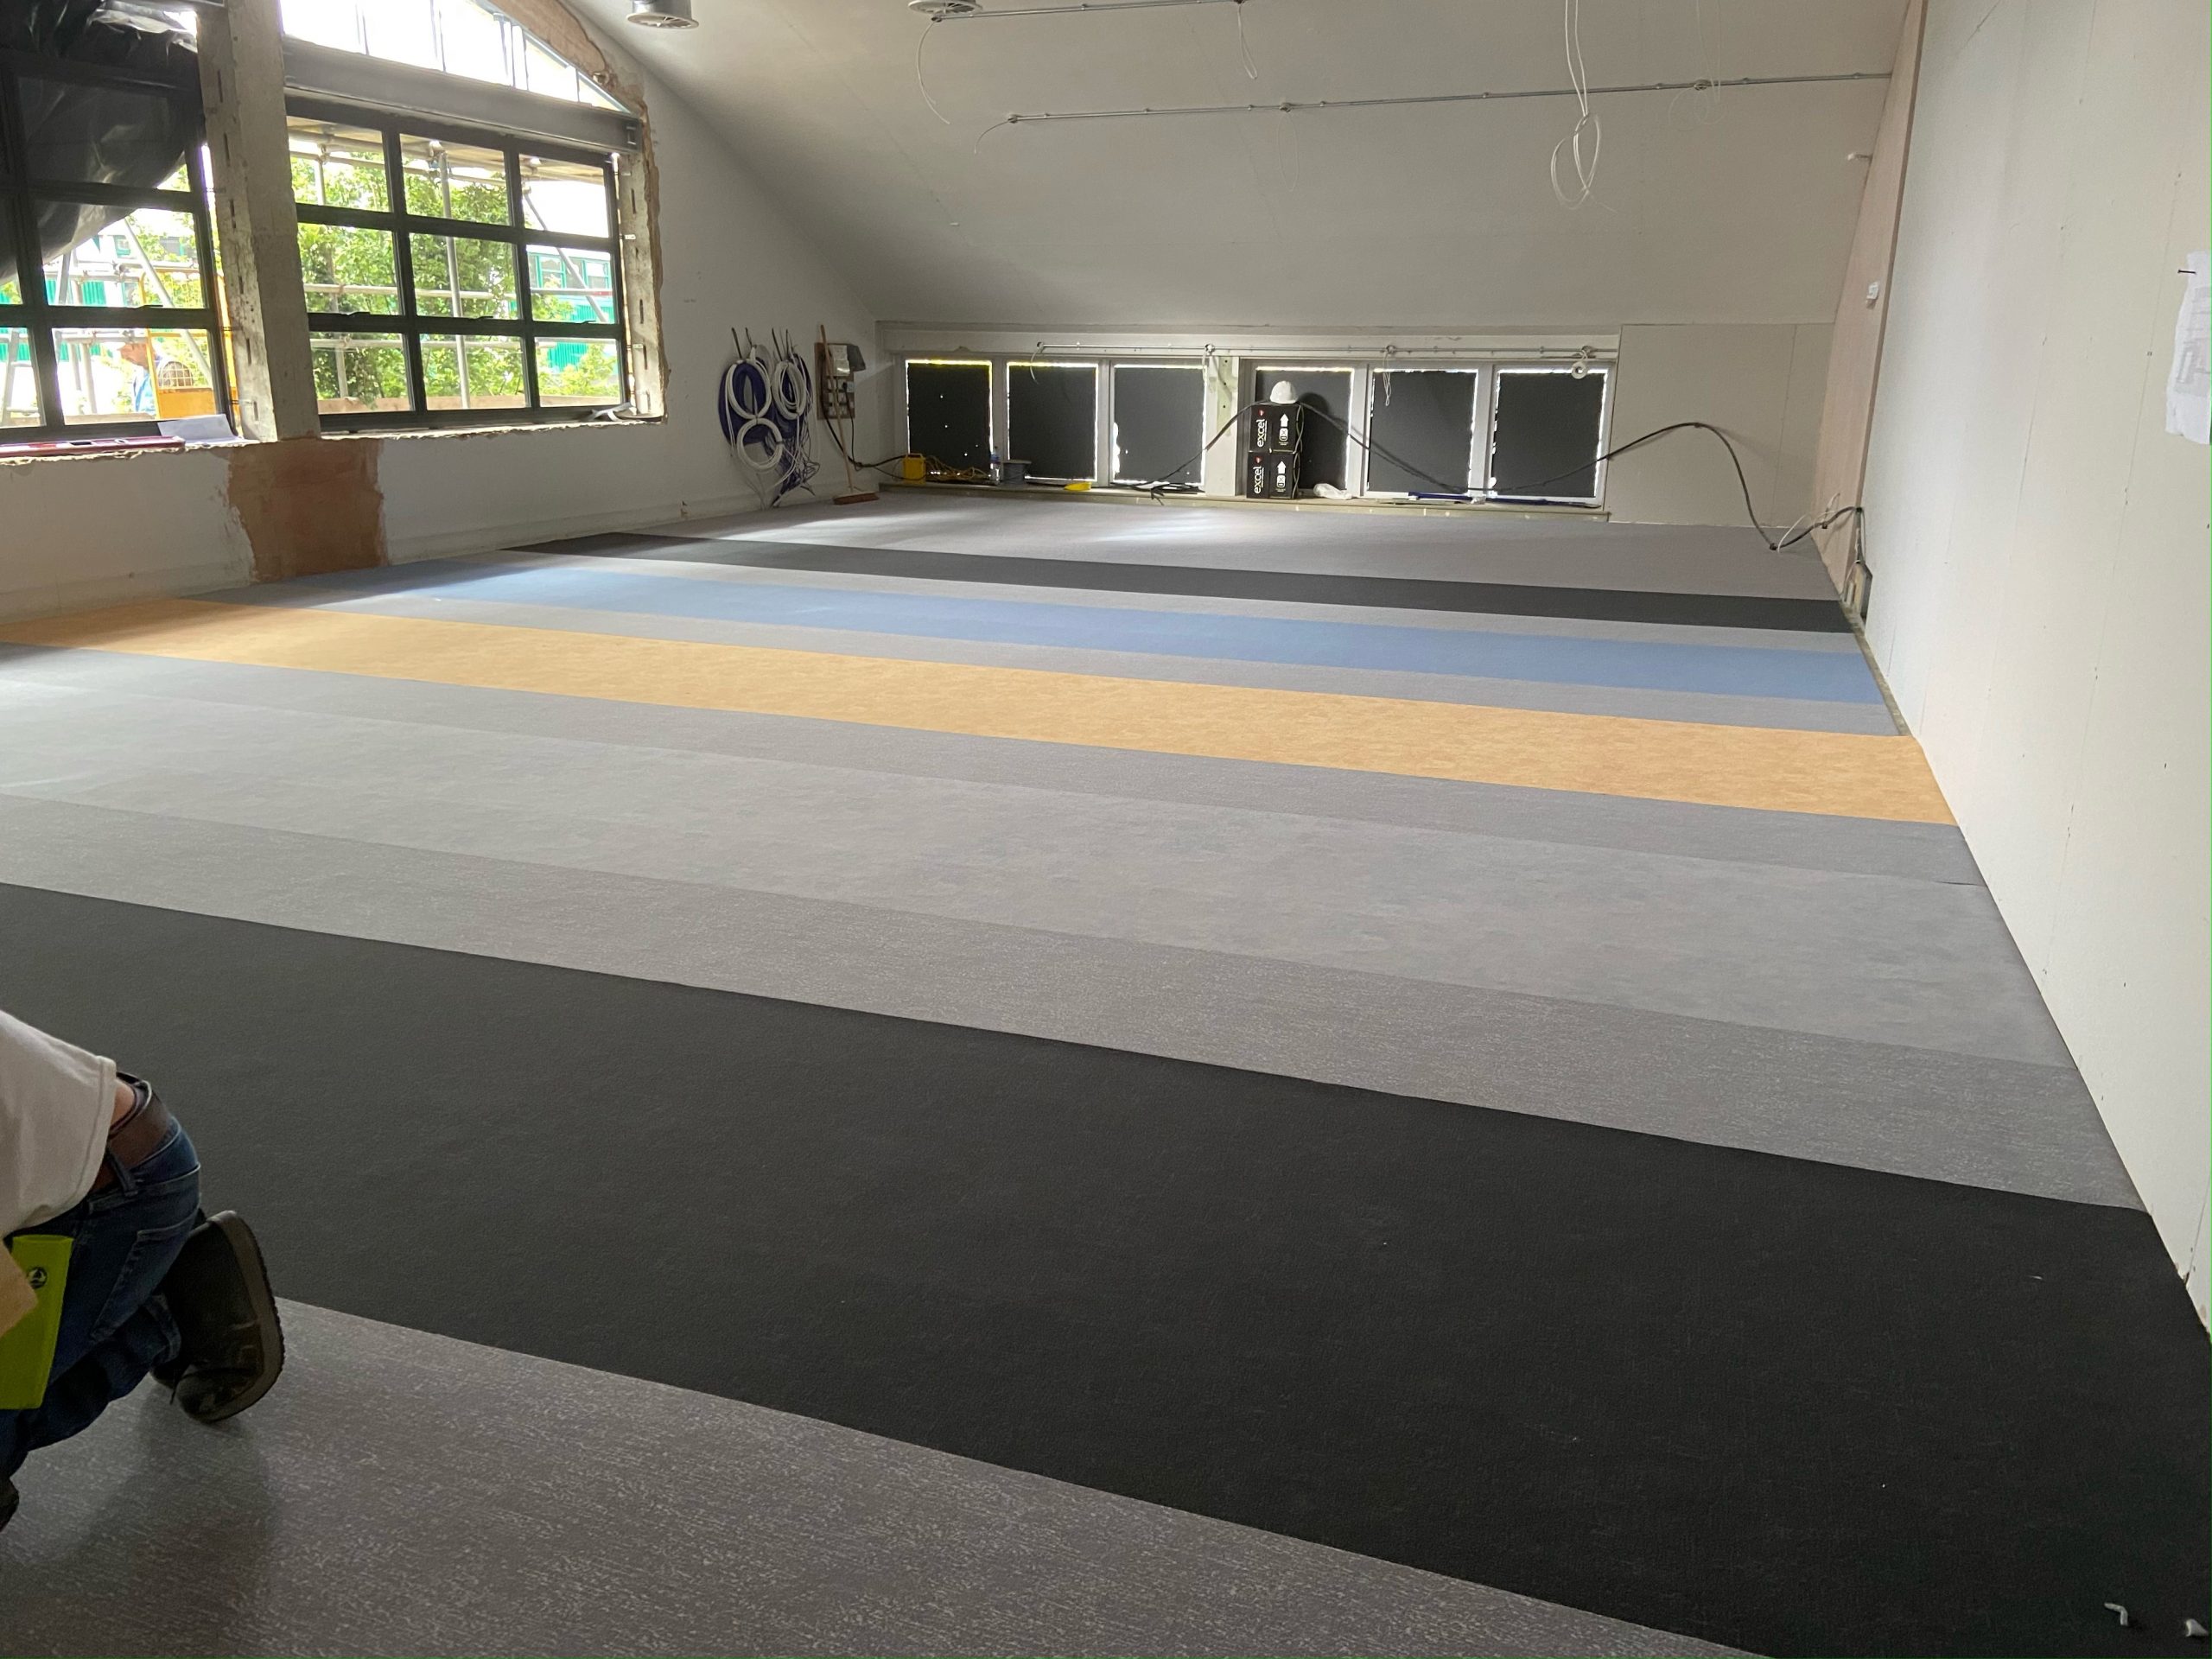 Cardinal Wiseman School, West London New Carpet Replacement